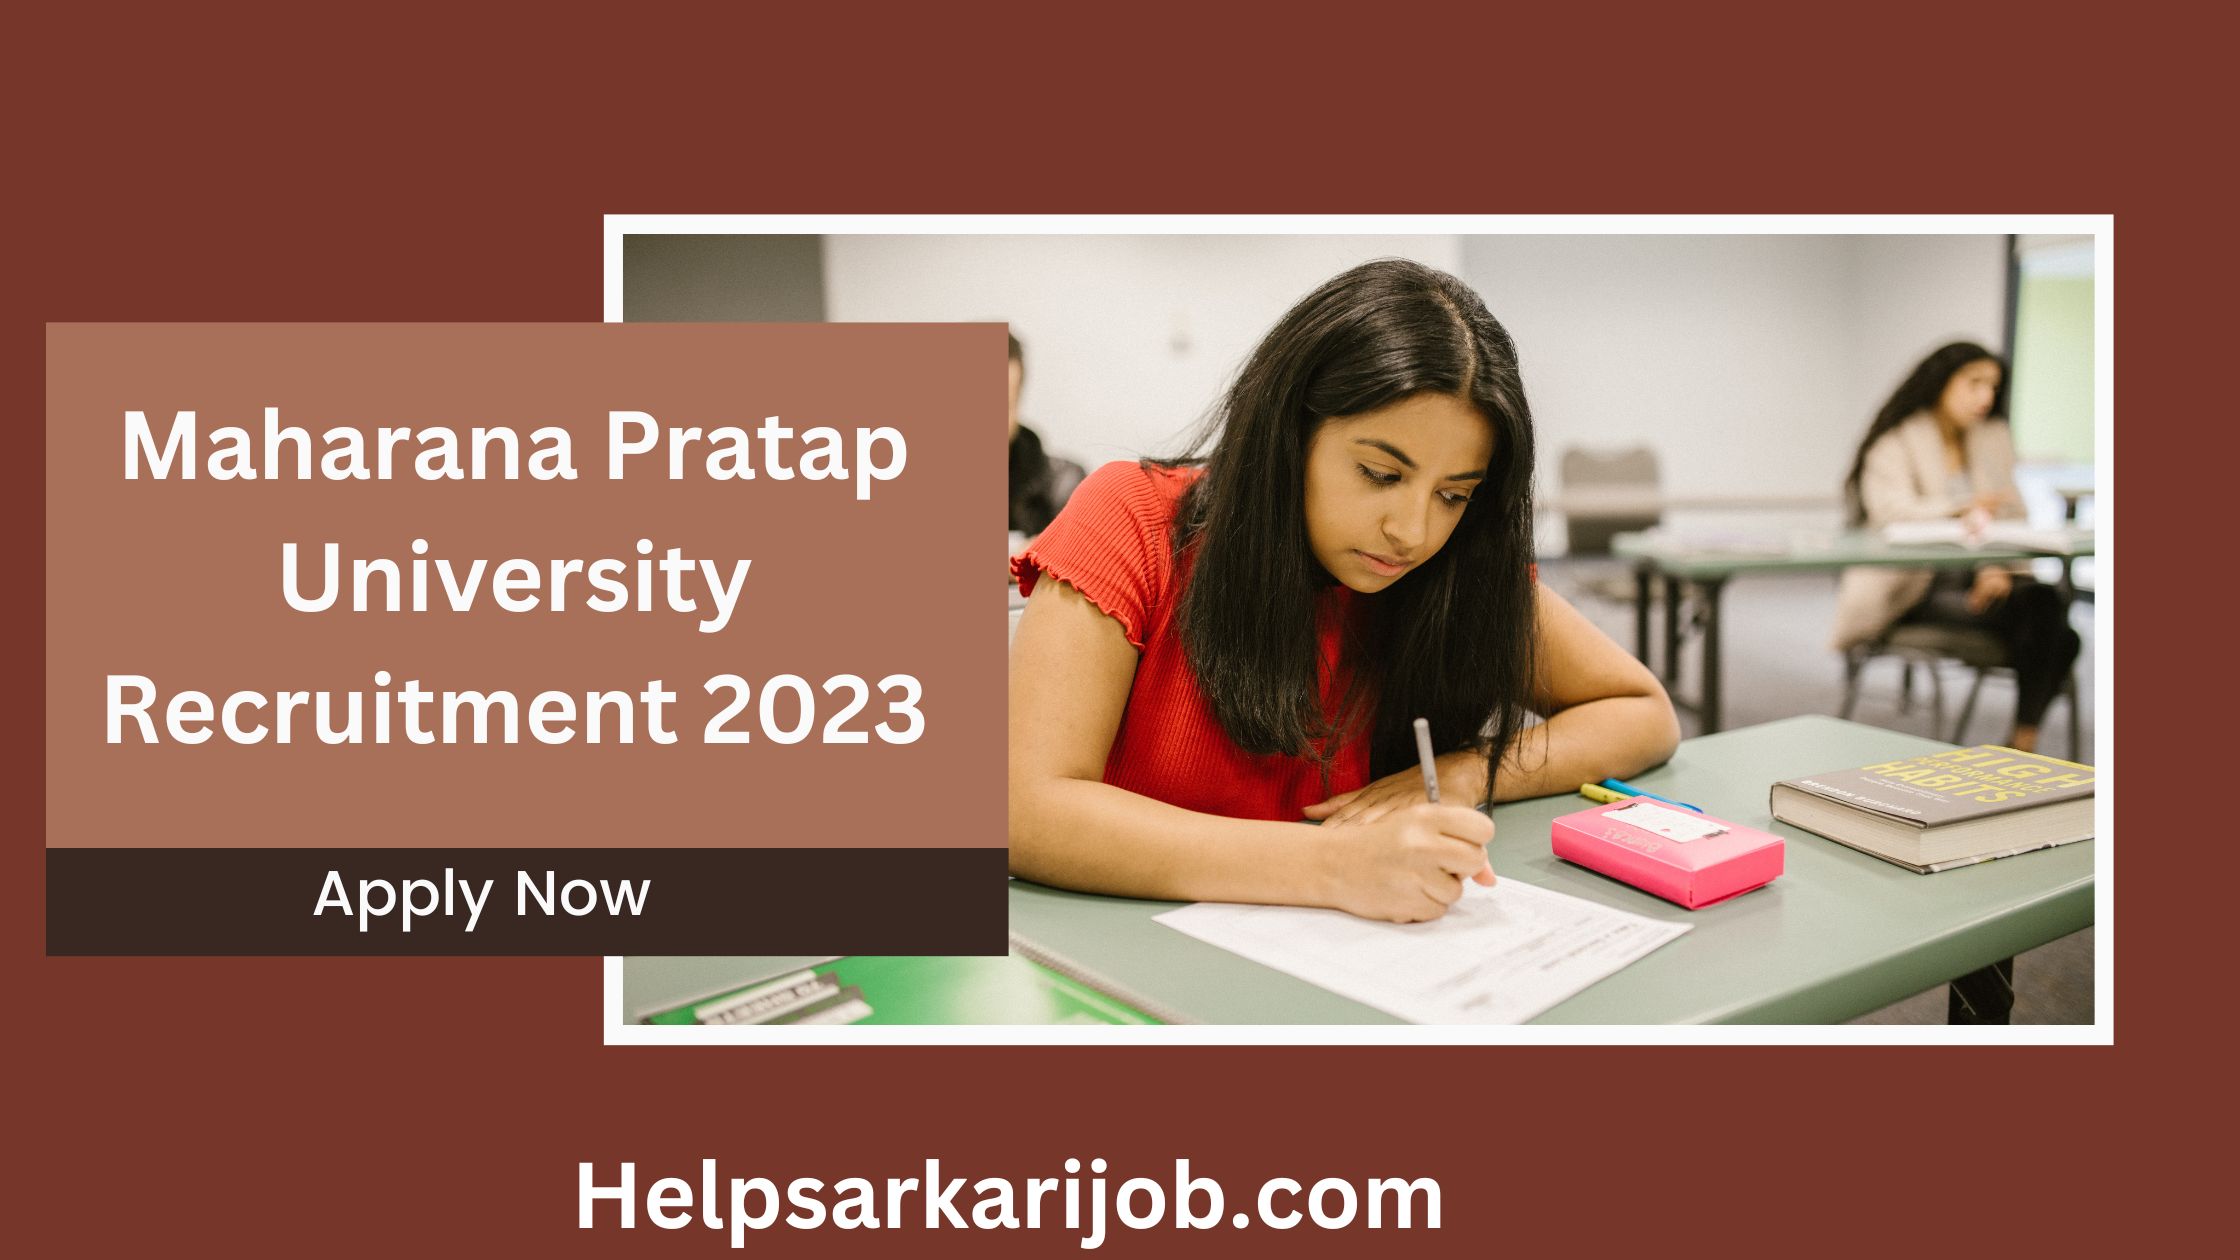 Maharana Pratap University Recruitment 2023